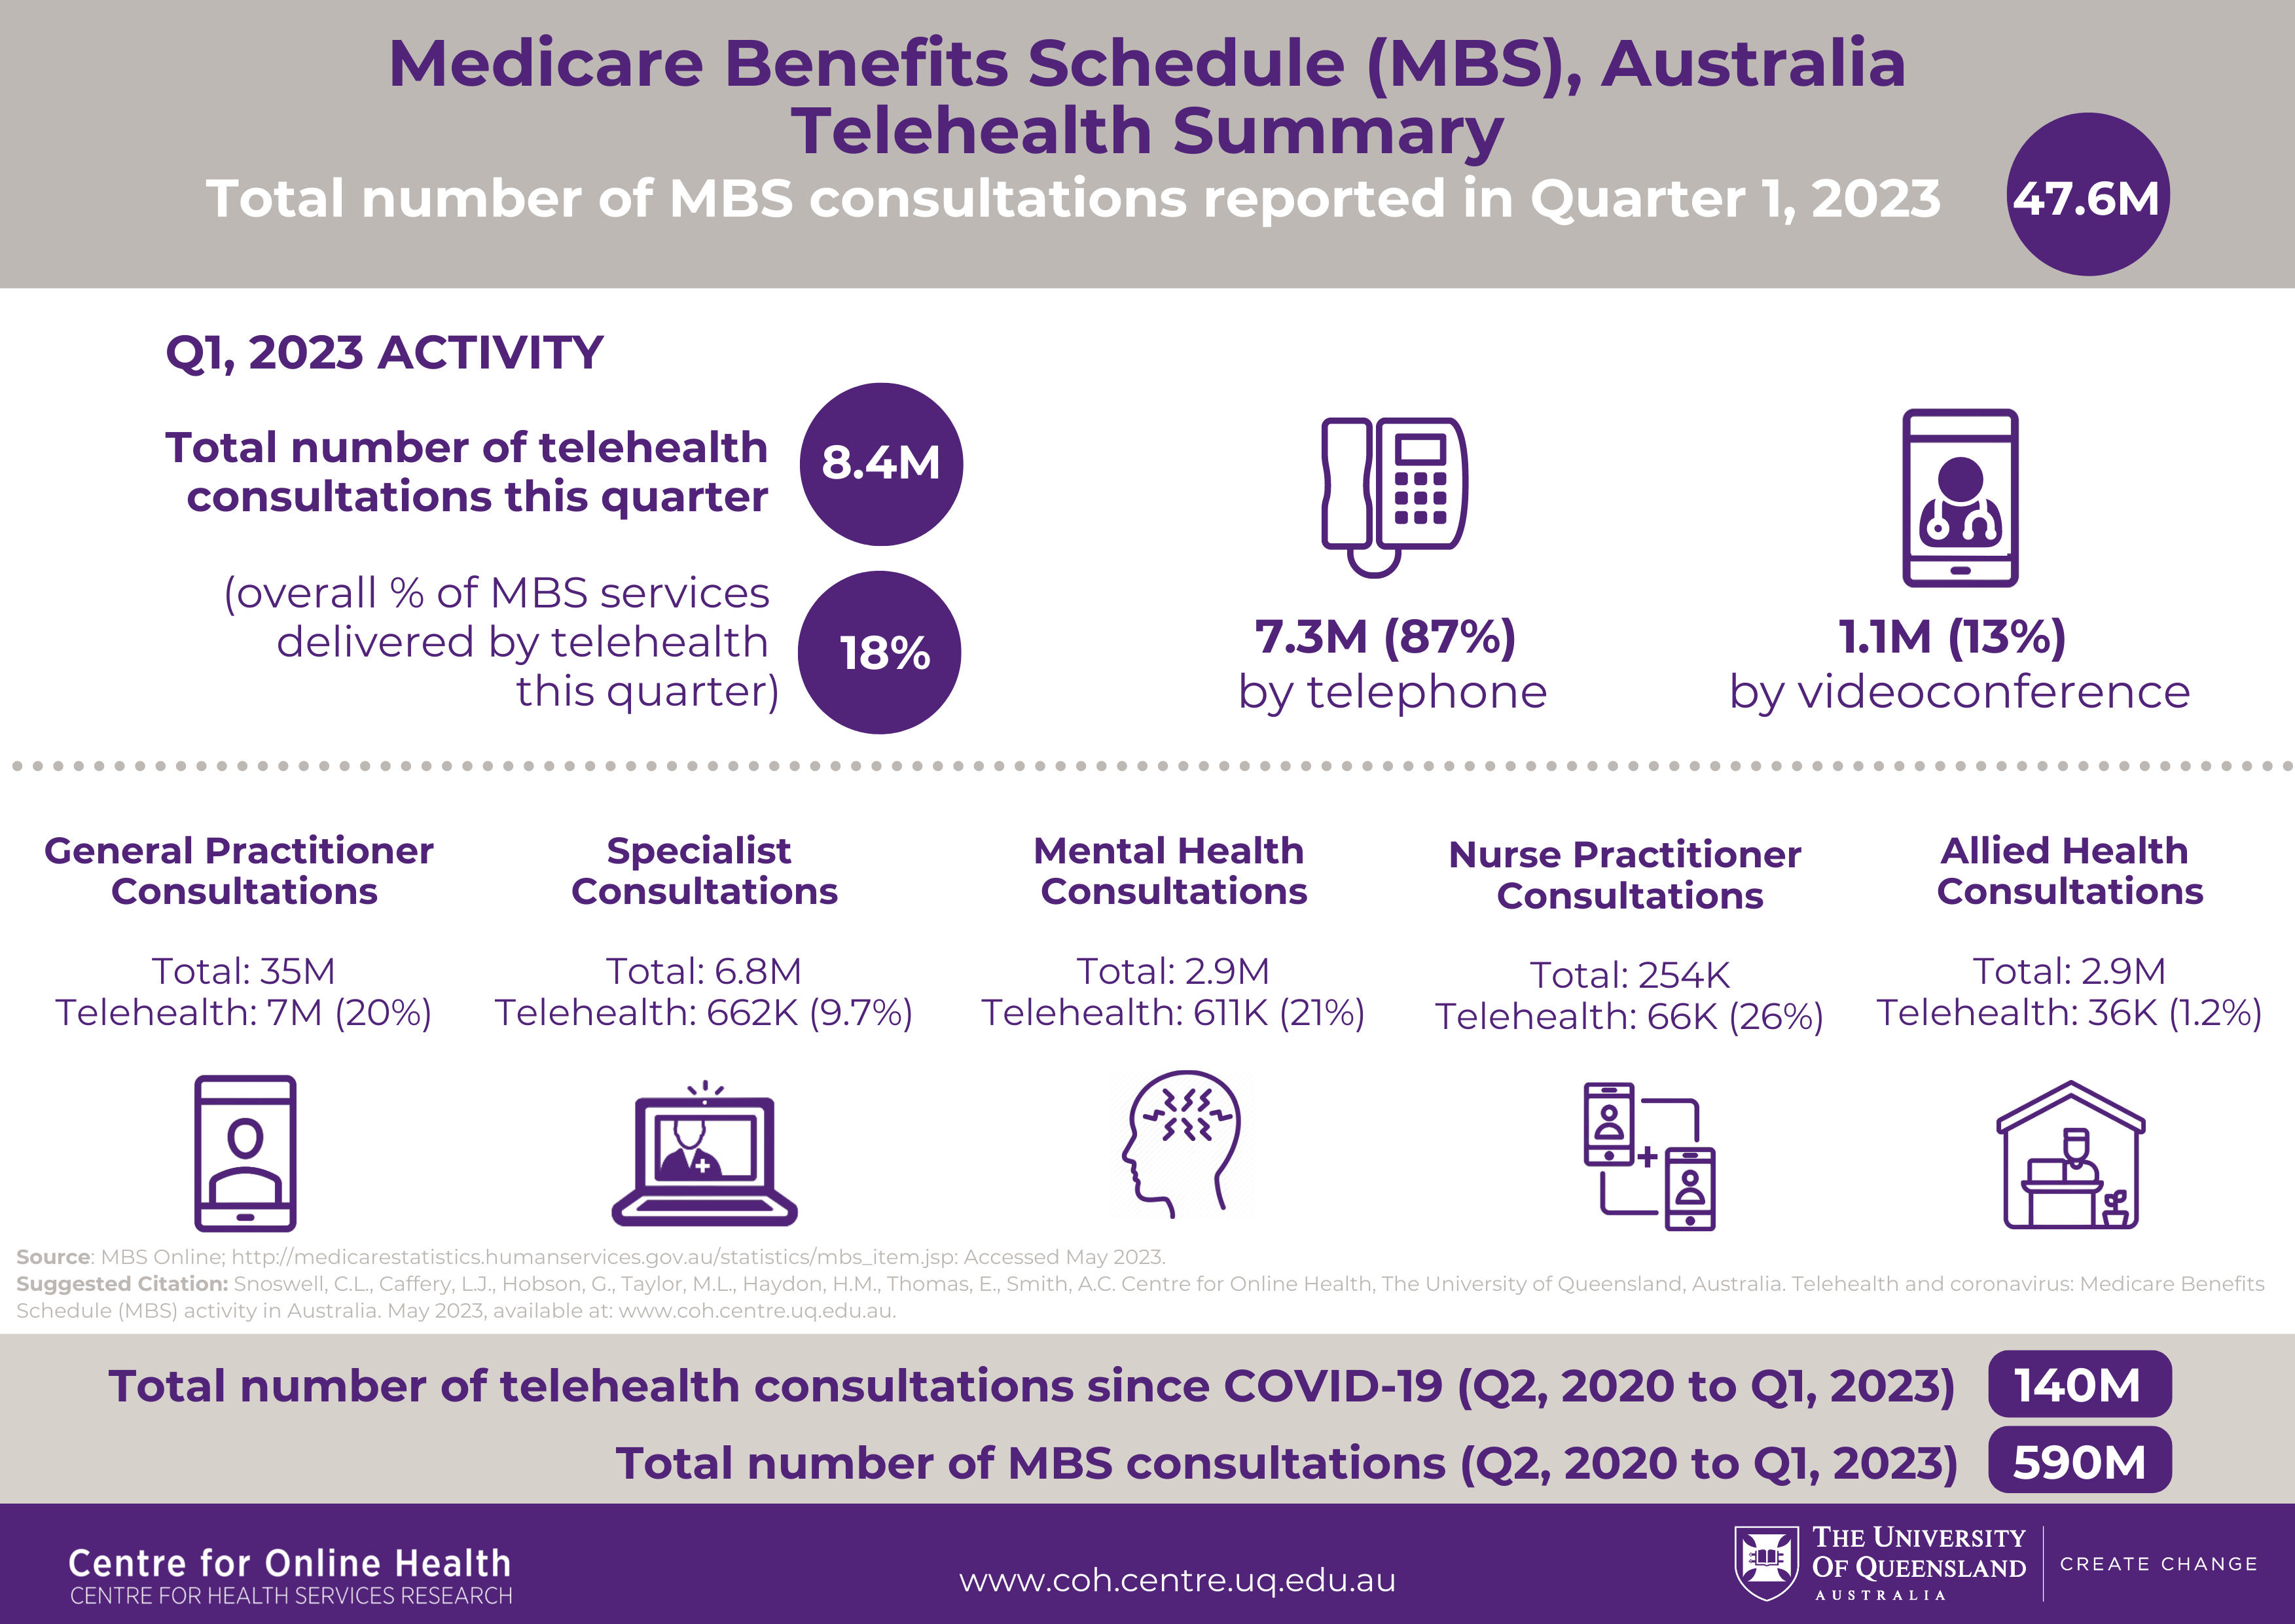 Telehealth and coronavirus Medicare Benefits Schedule (MBS) activity in Australia Centre for